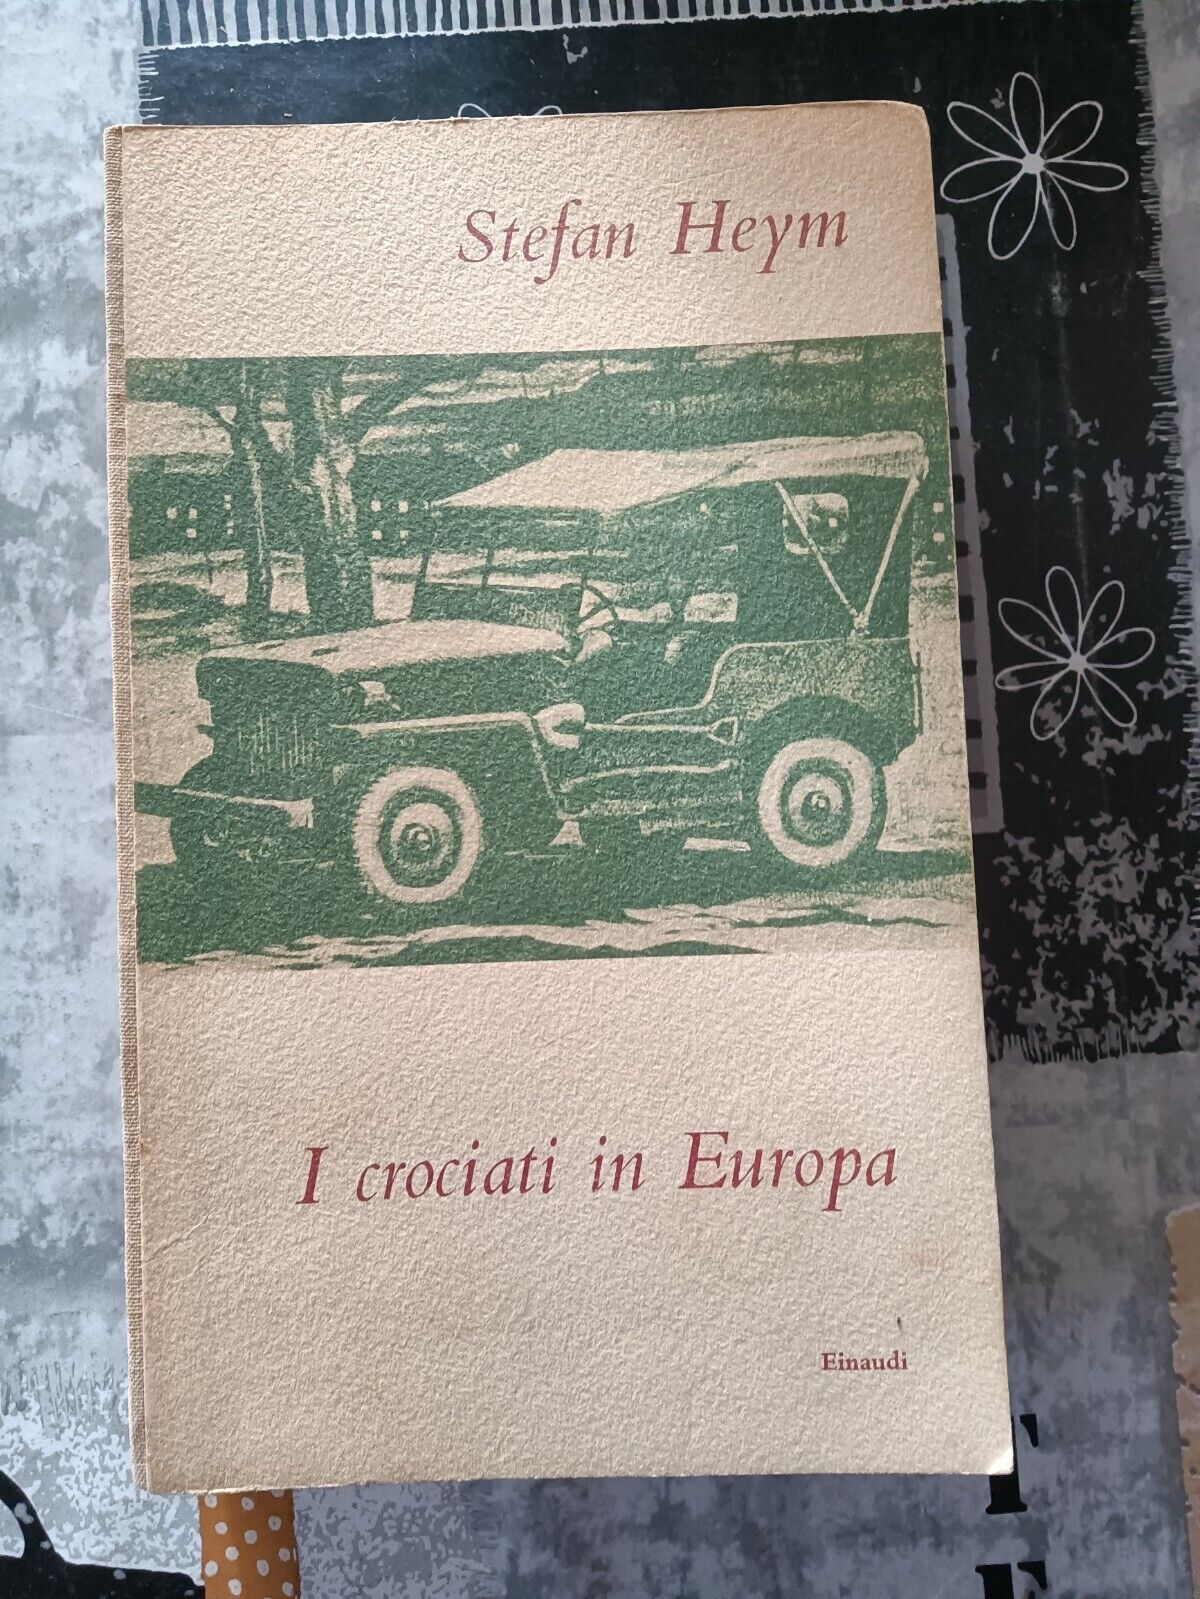 I crociati in Europa | Stefan Heym - Einaudi